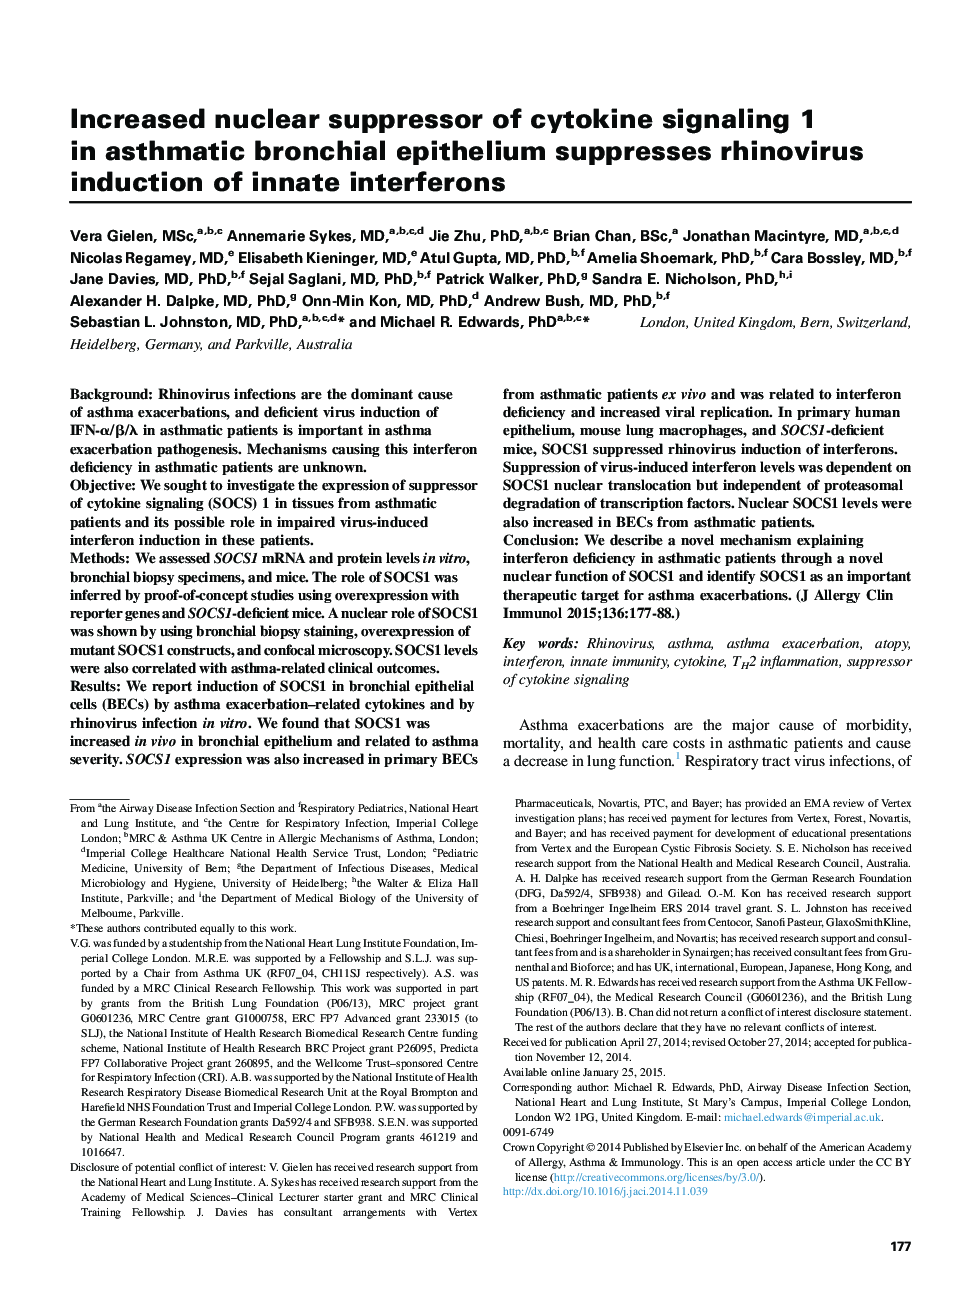 Increased nuclear suppressor of cytokine signaling 1 in asthmatic bronchial epithelium suppresses rhinovirus induction of innate interferons